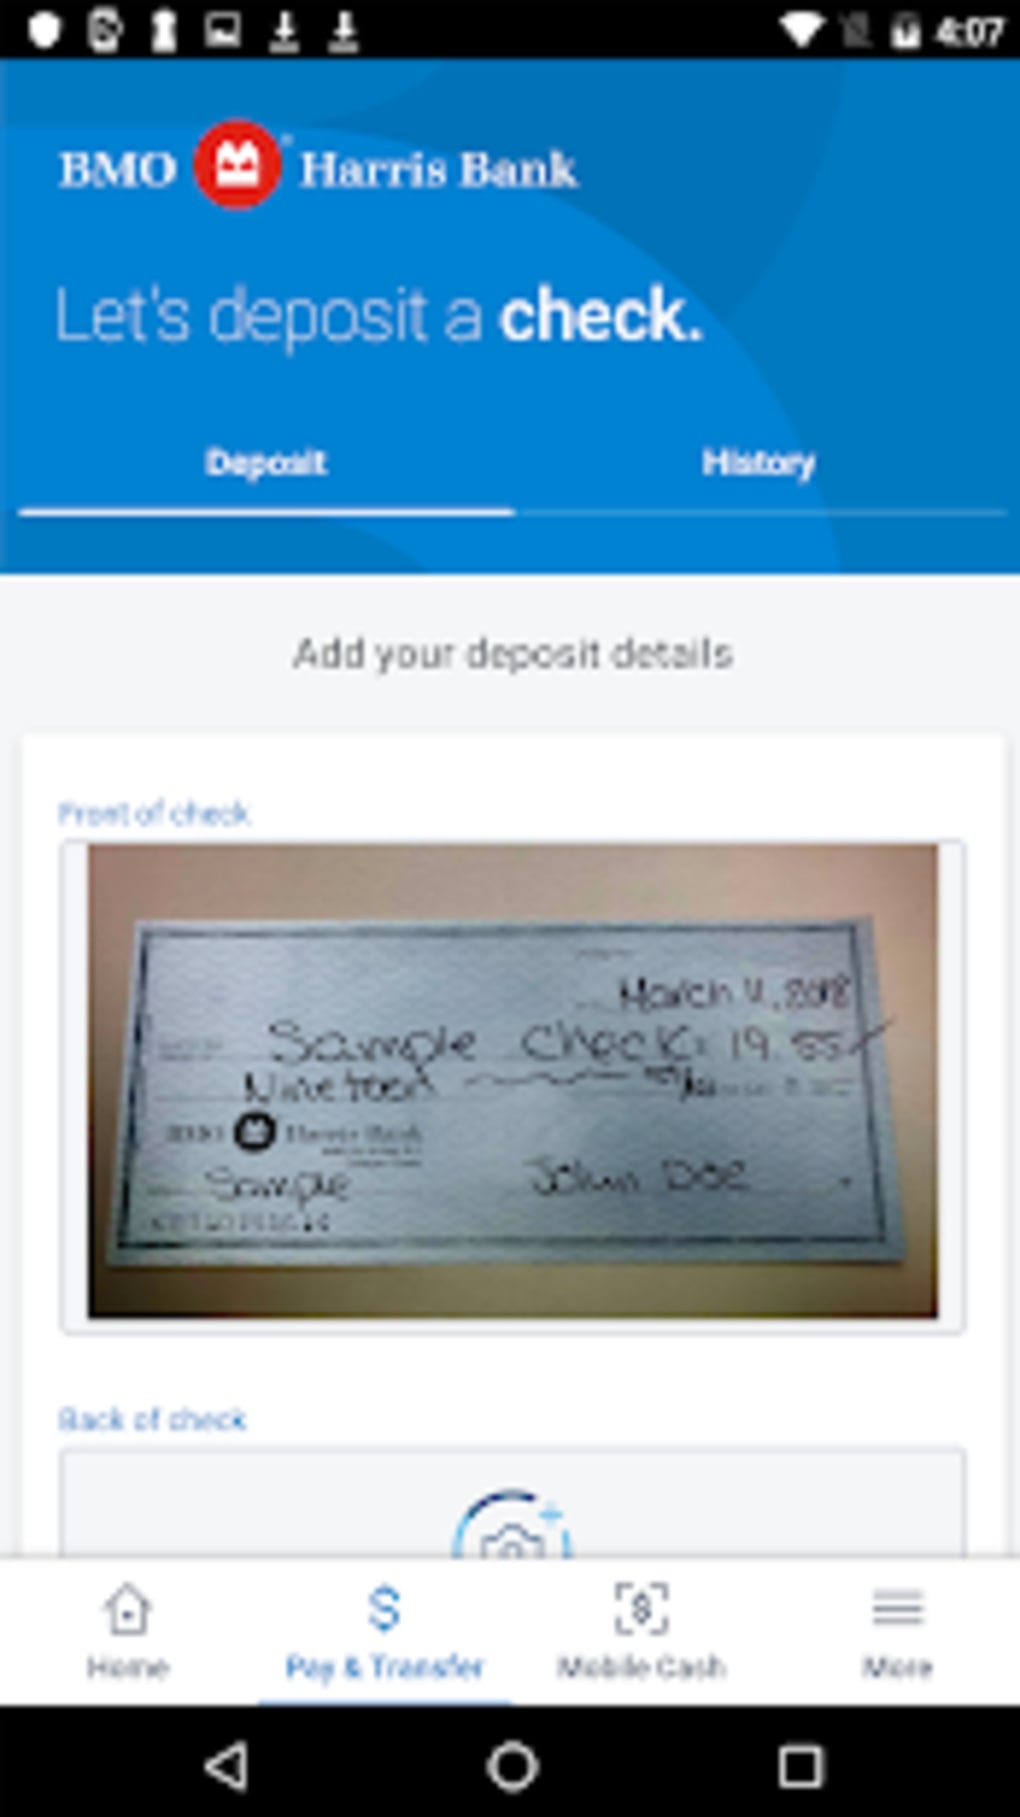 bmo harris digital banking app